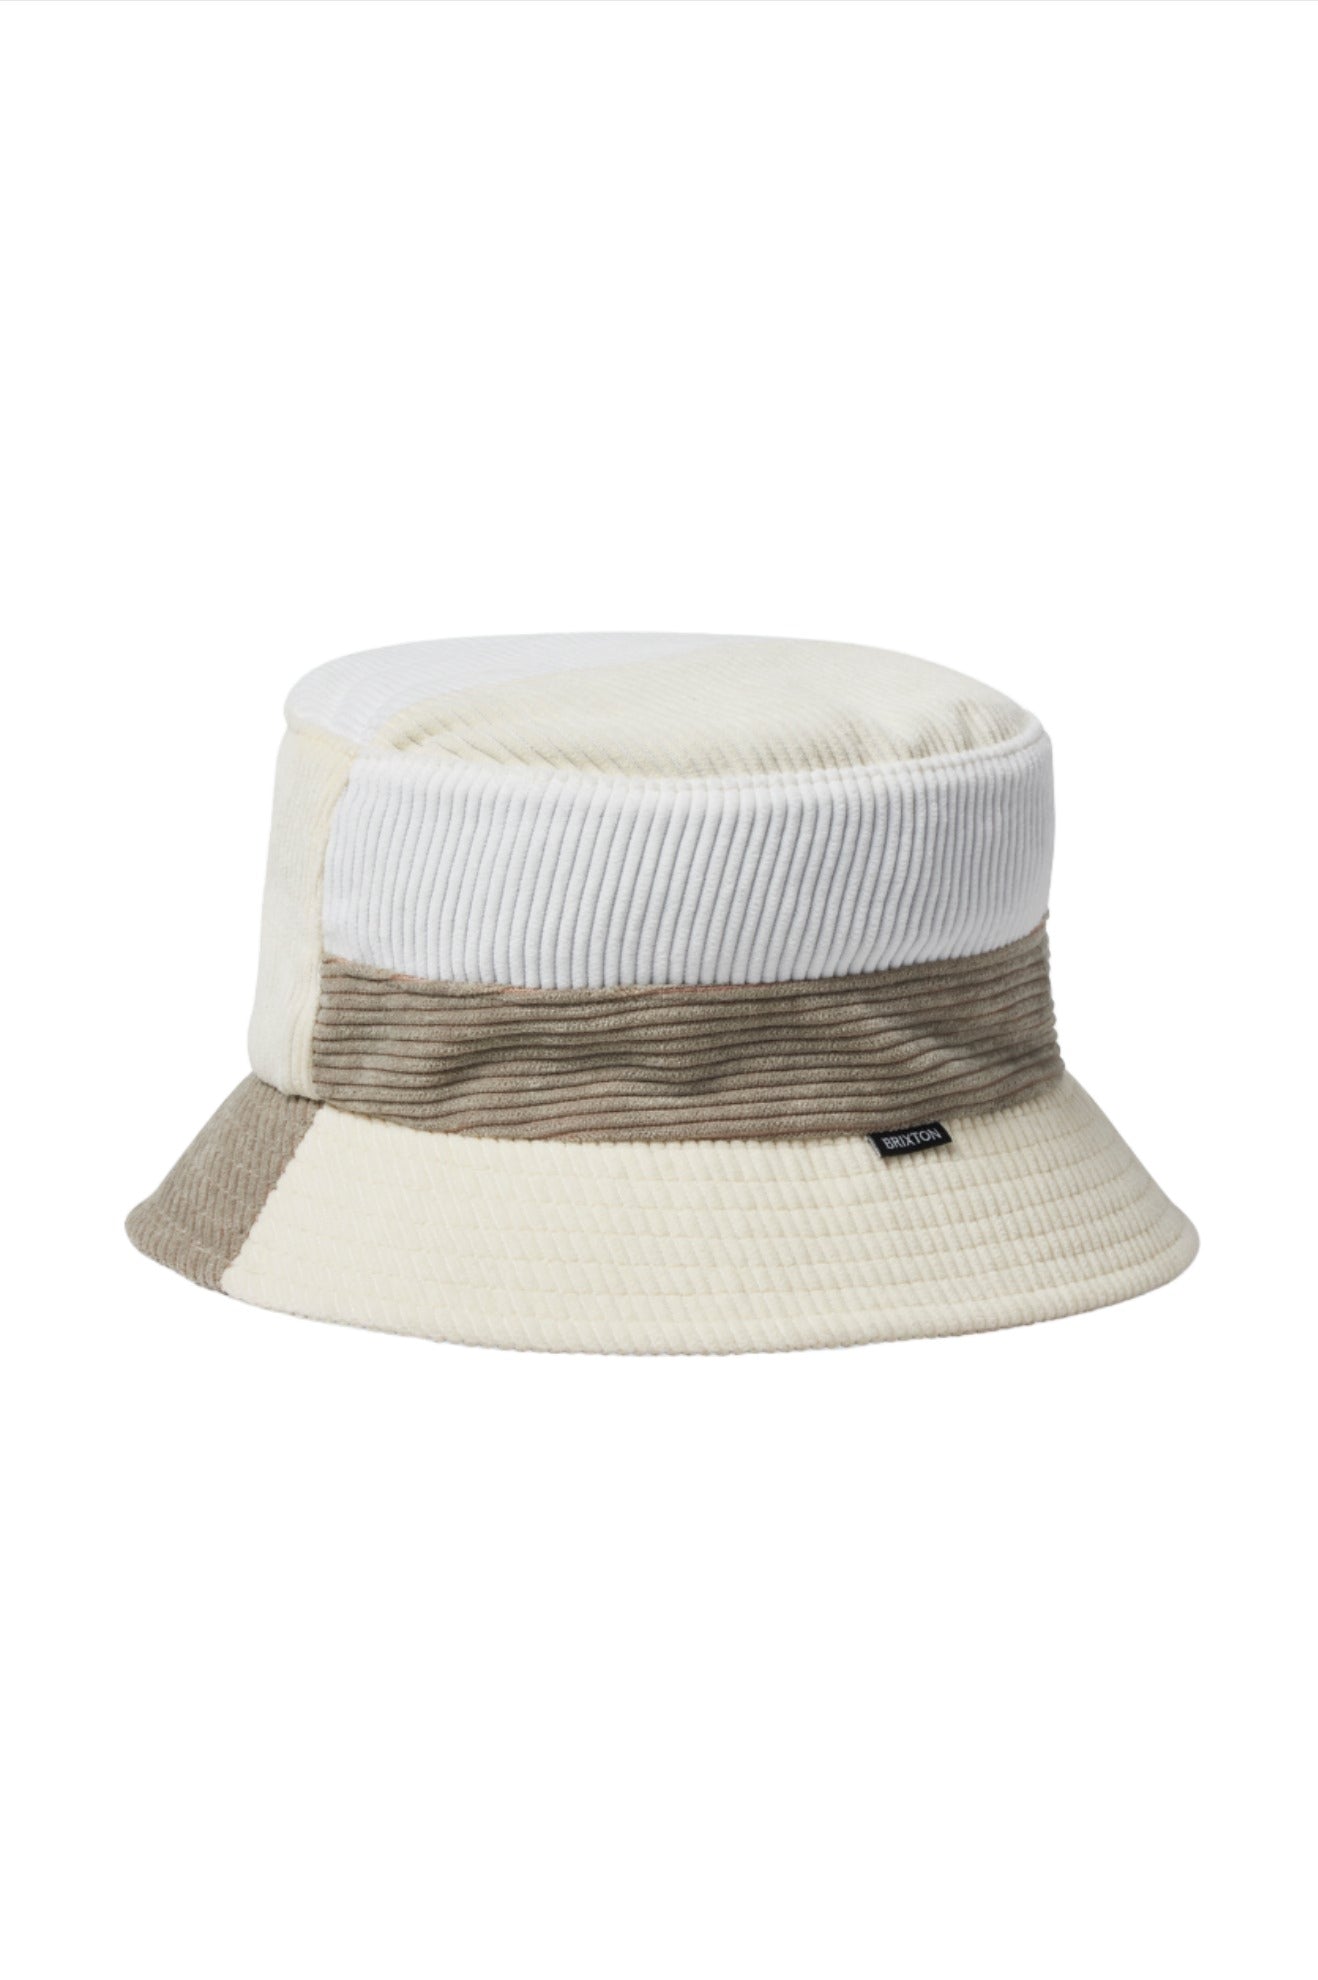 Gramercy Packable Bucket Hat - Off White/Beige/White